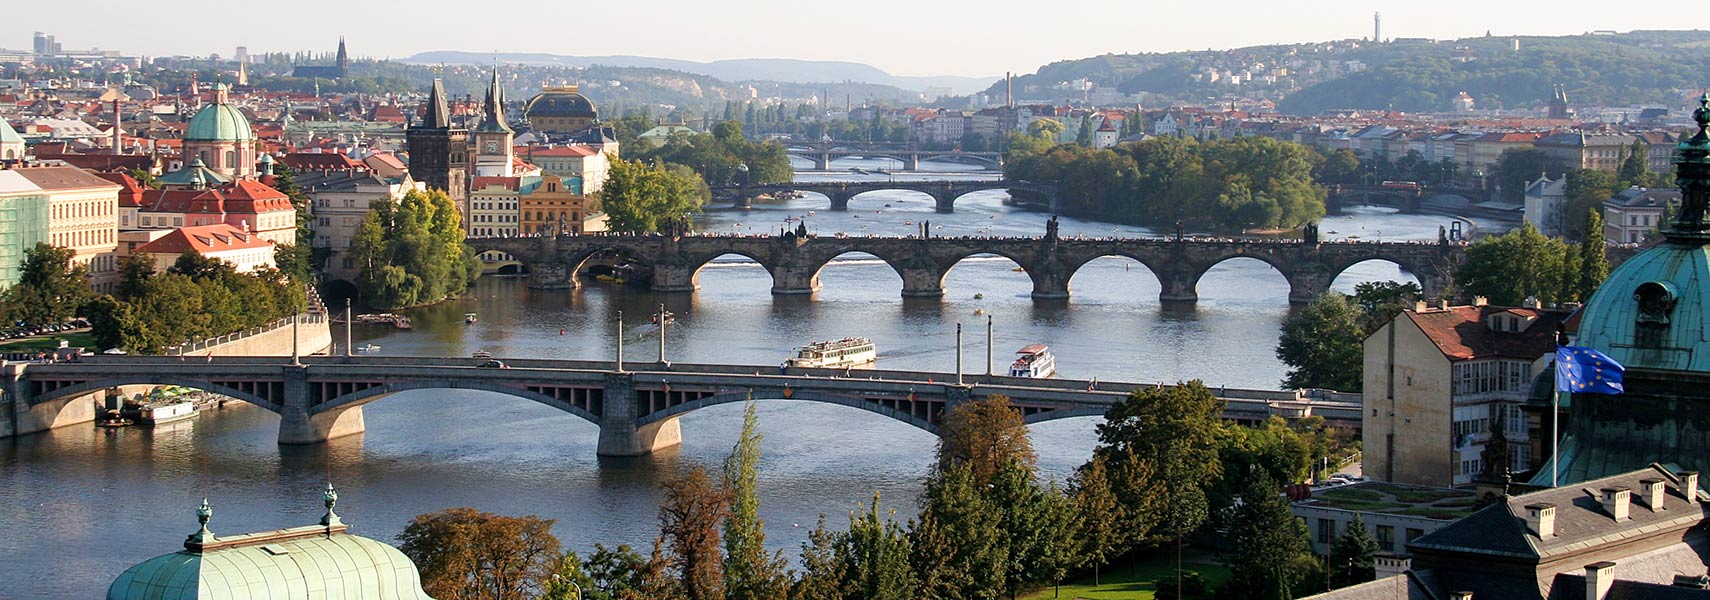 Central Prague with Vltava River bridges